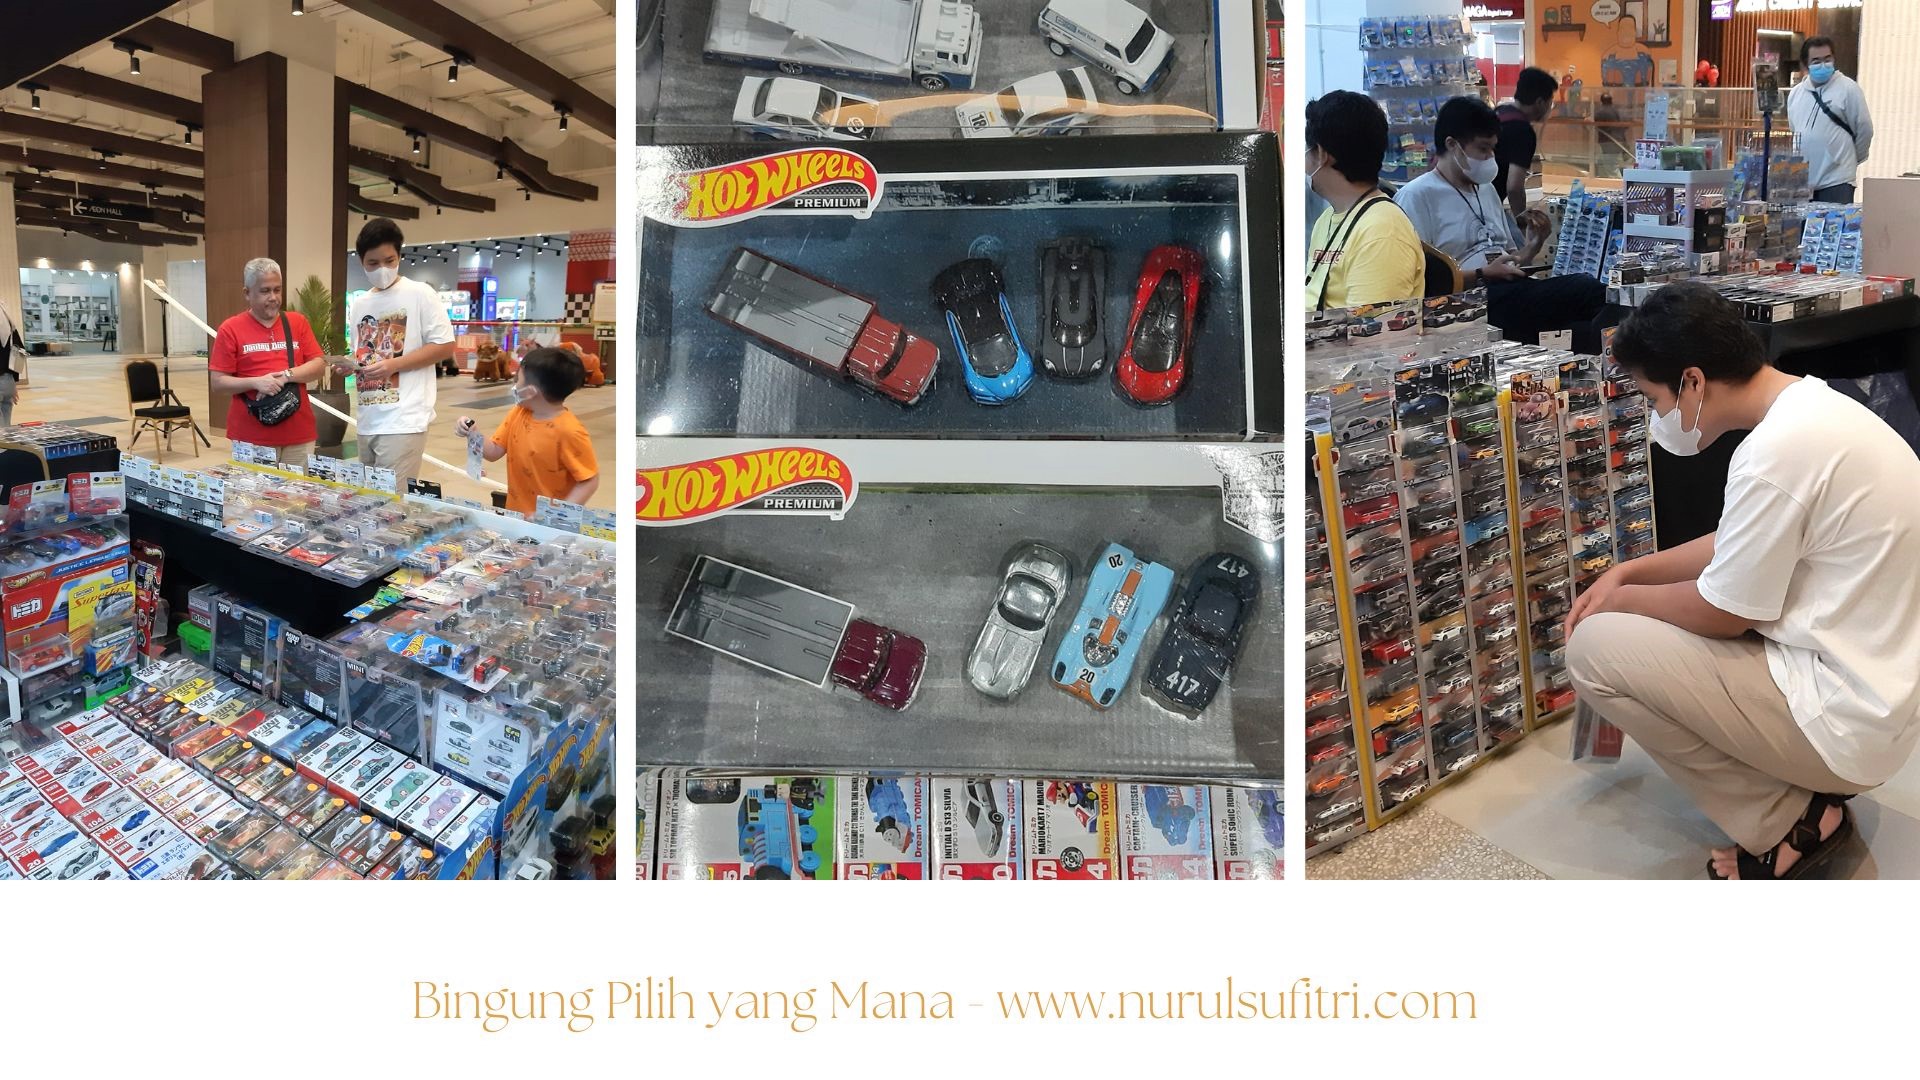 Hot Wheels, Serunya Belanja dan Menang Lelang di Pasar Mainan Aeon Mall Tanjung Barat